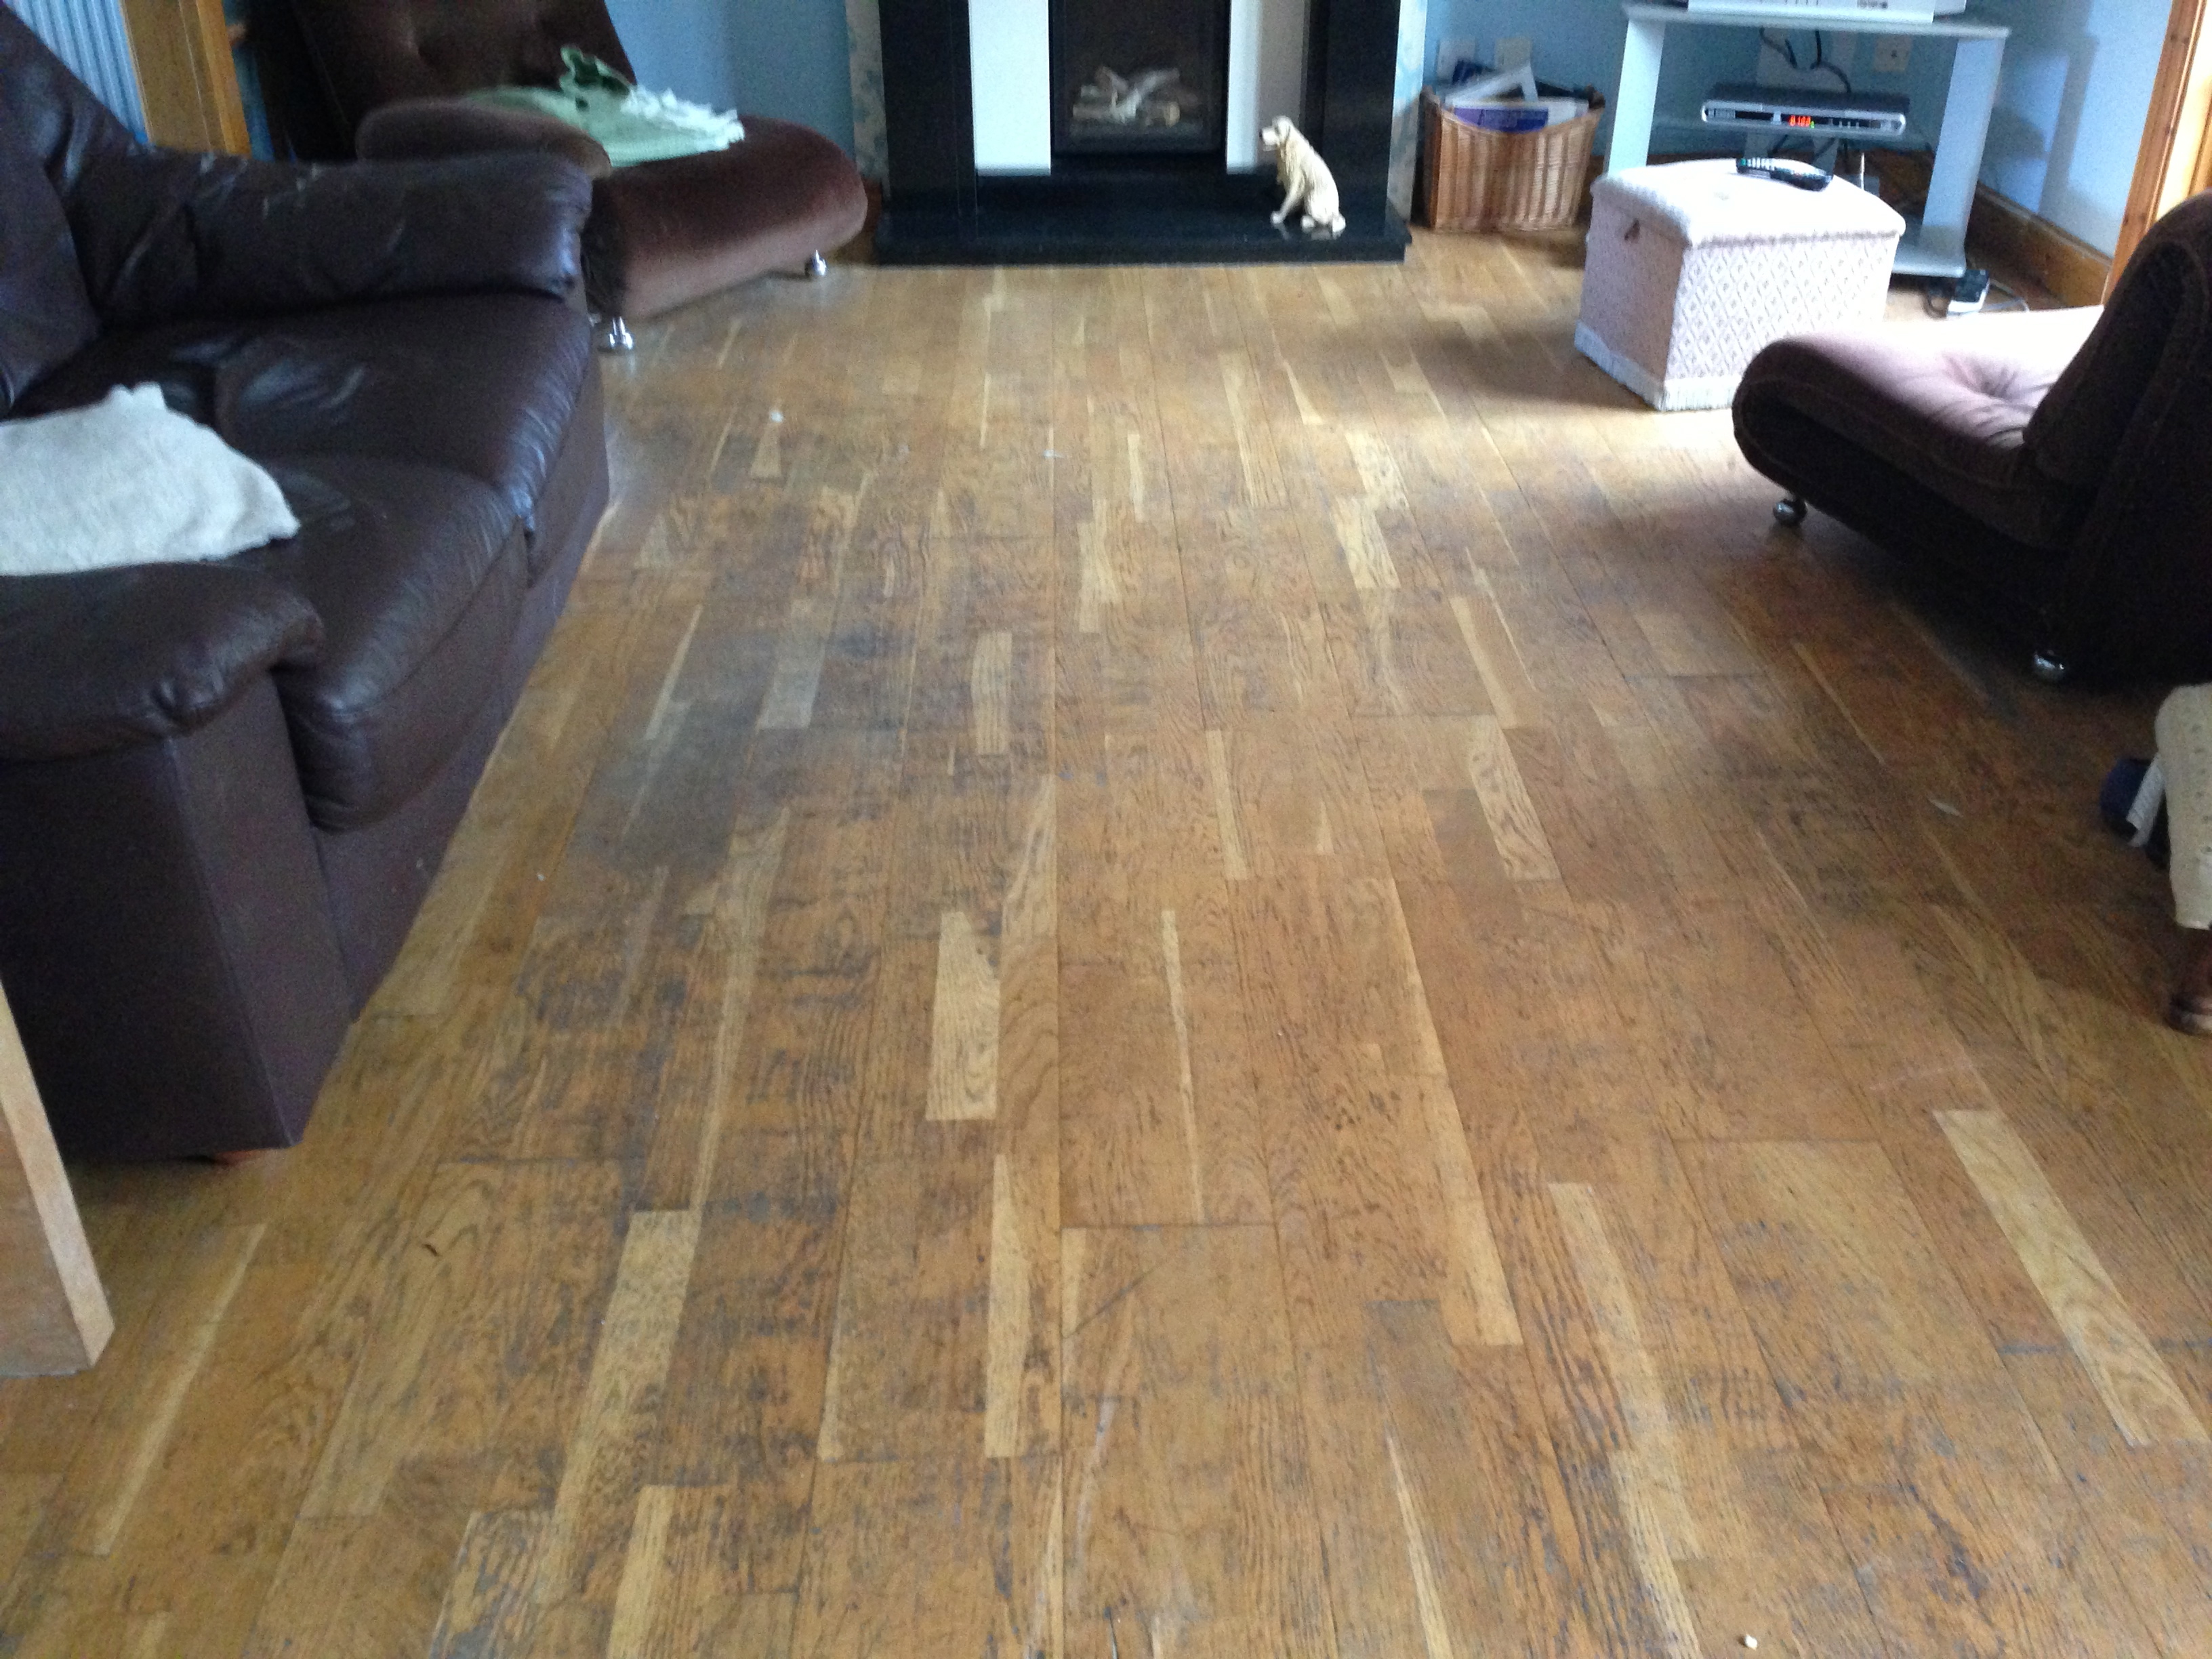 Laminate Wood Floor Restoration The, How To Revive Laminate Wood Floors